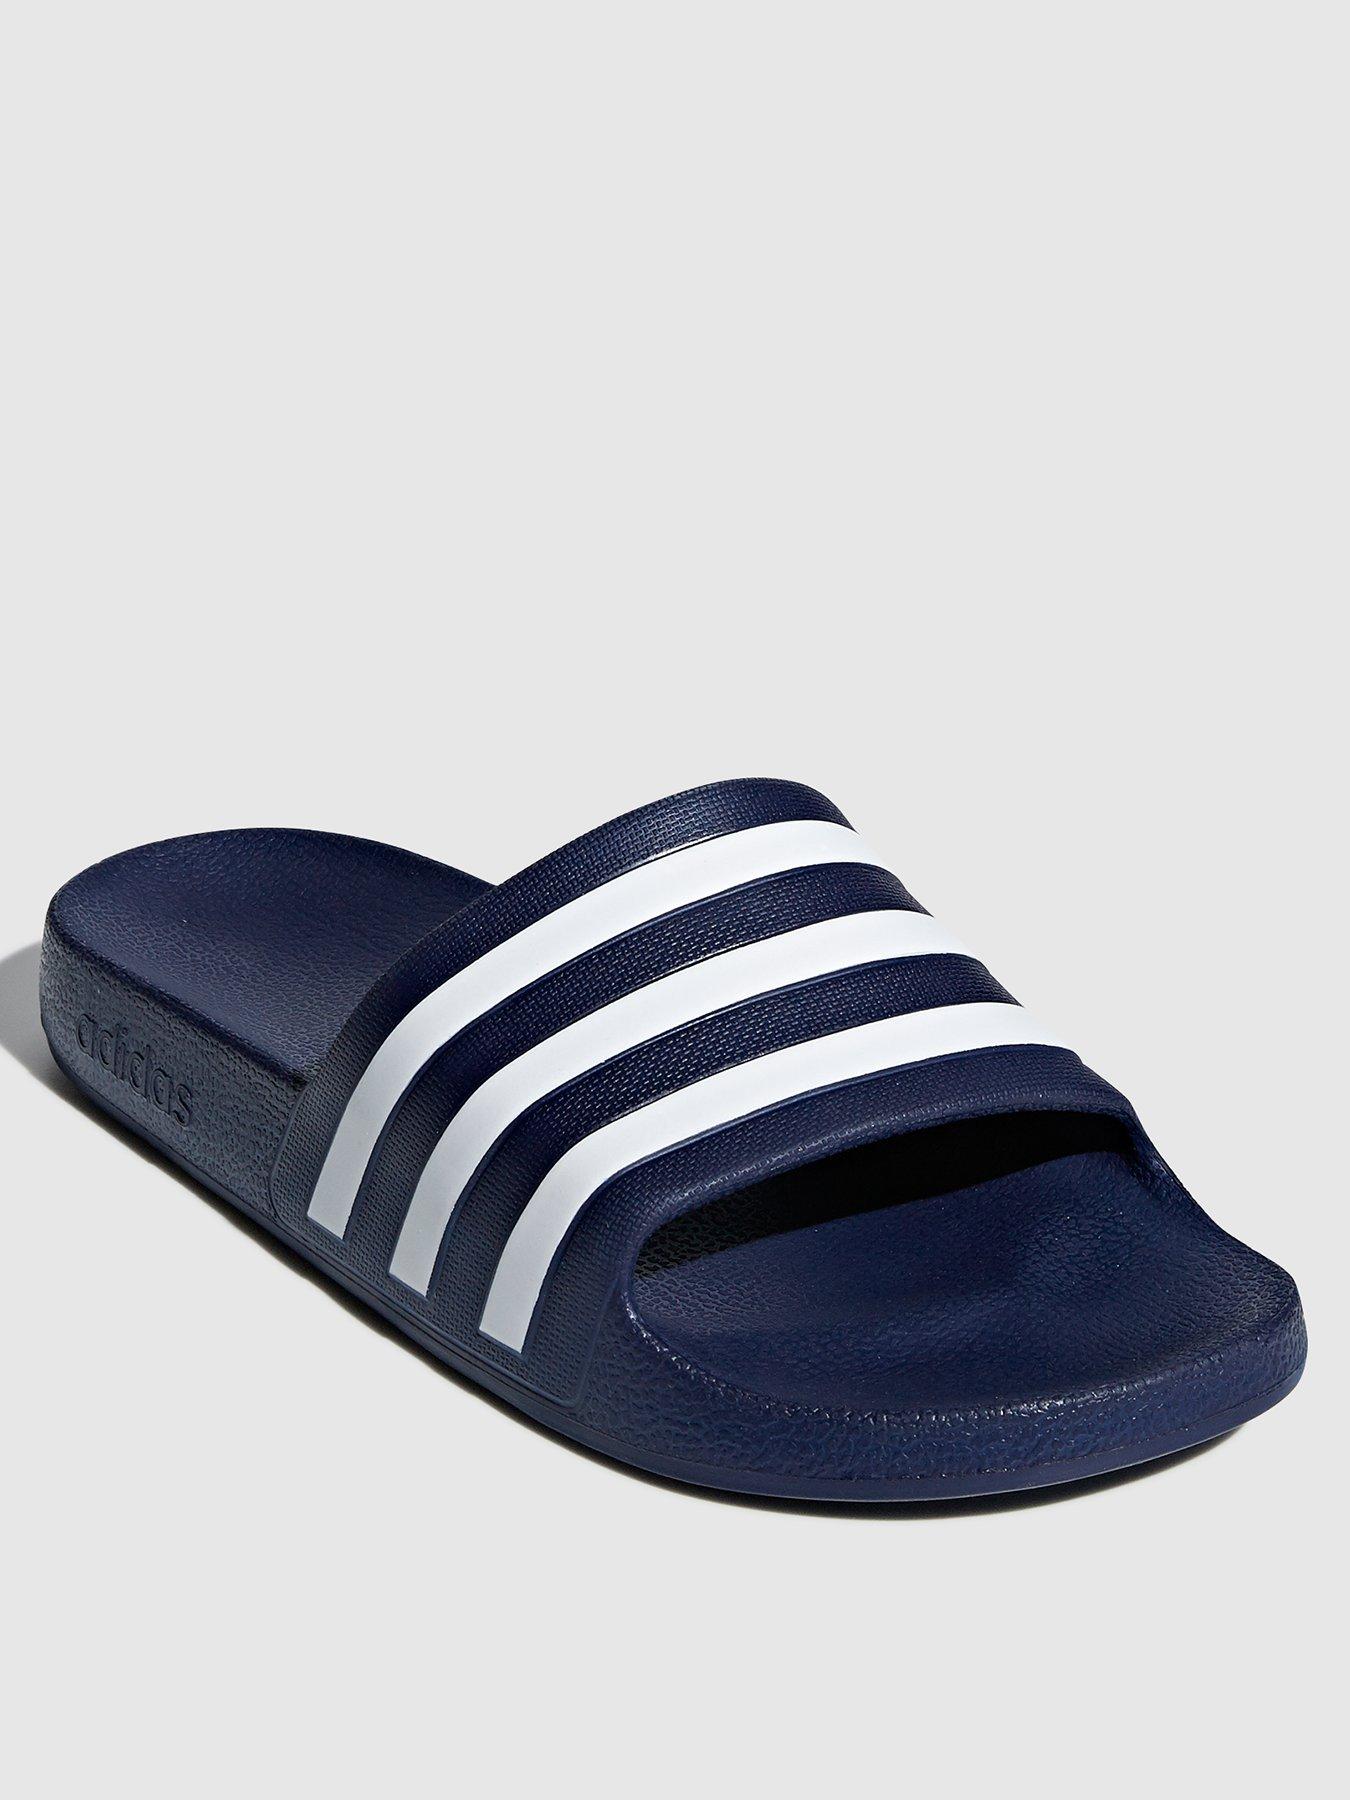 adidas navy blue flip flops